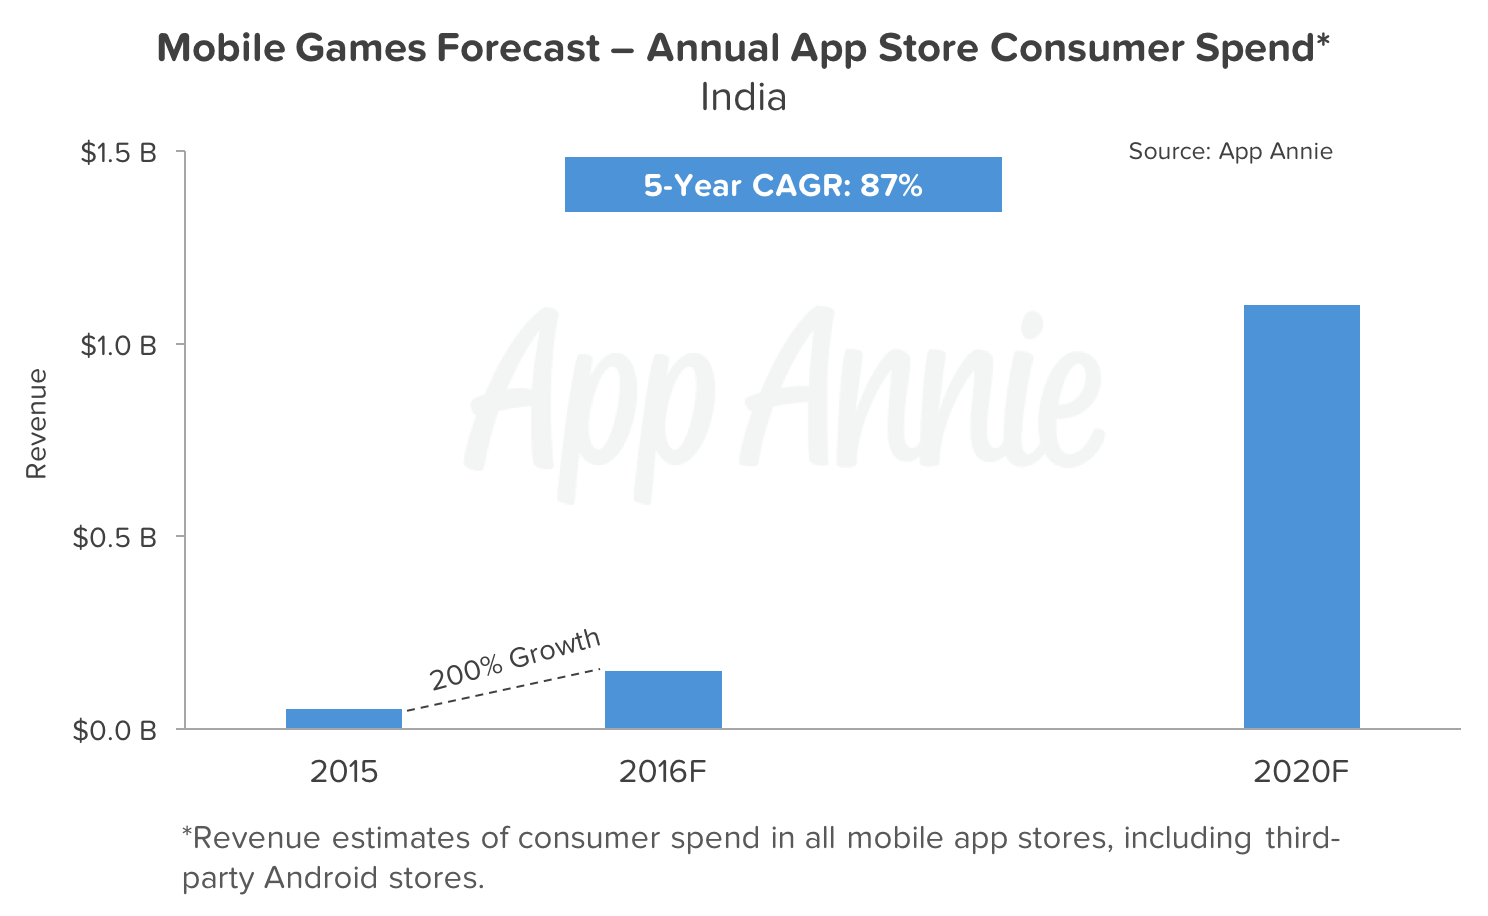 forecast-mobile-games-annual-app-store-consumer-spend-india